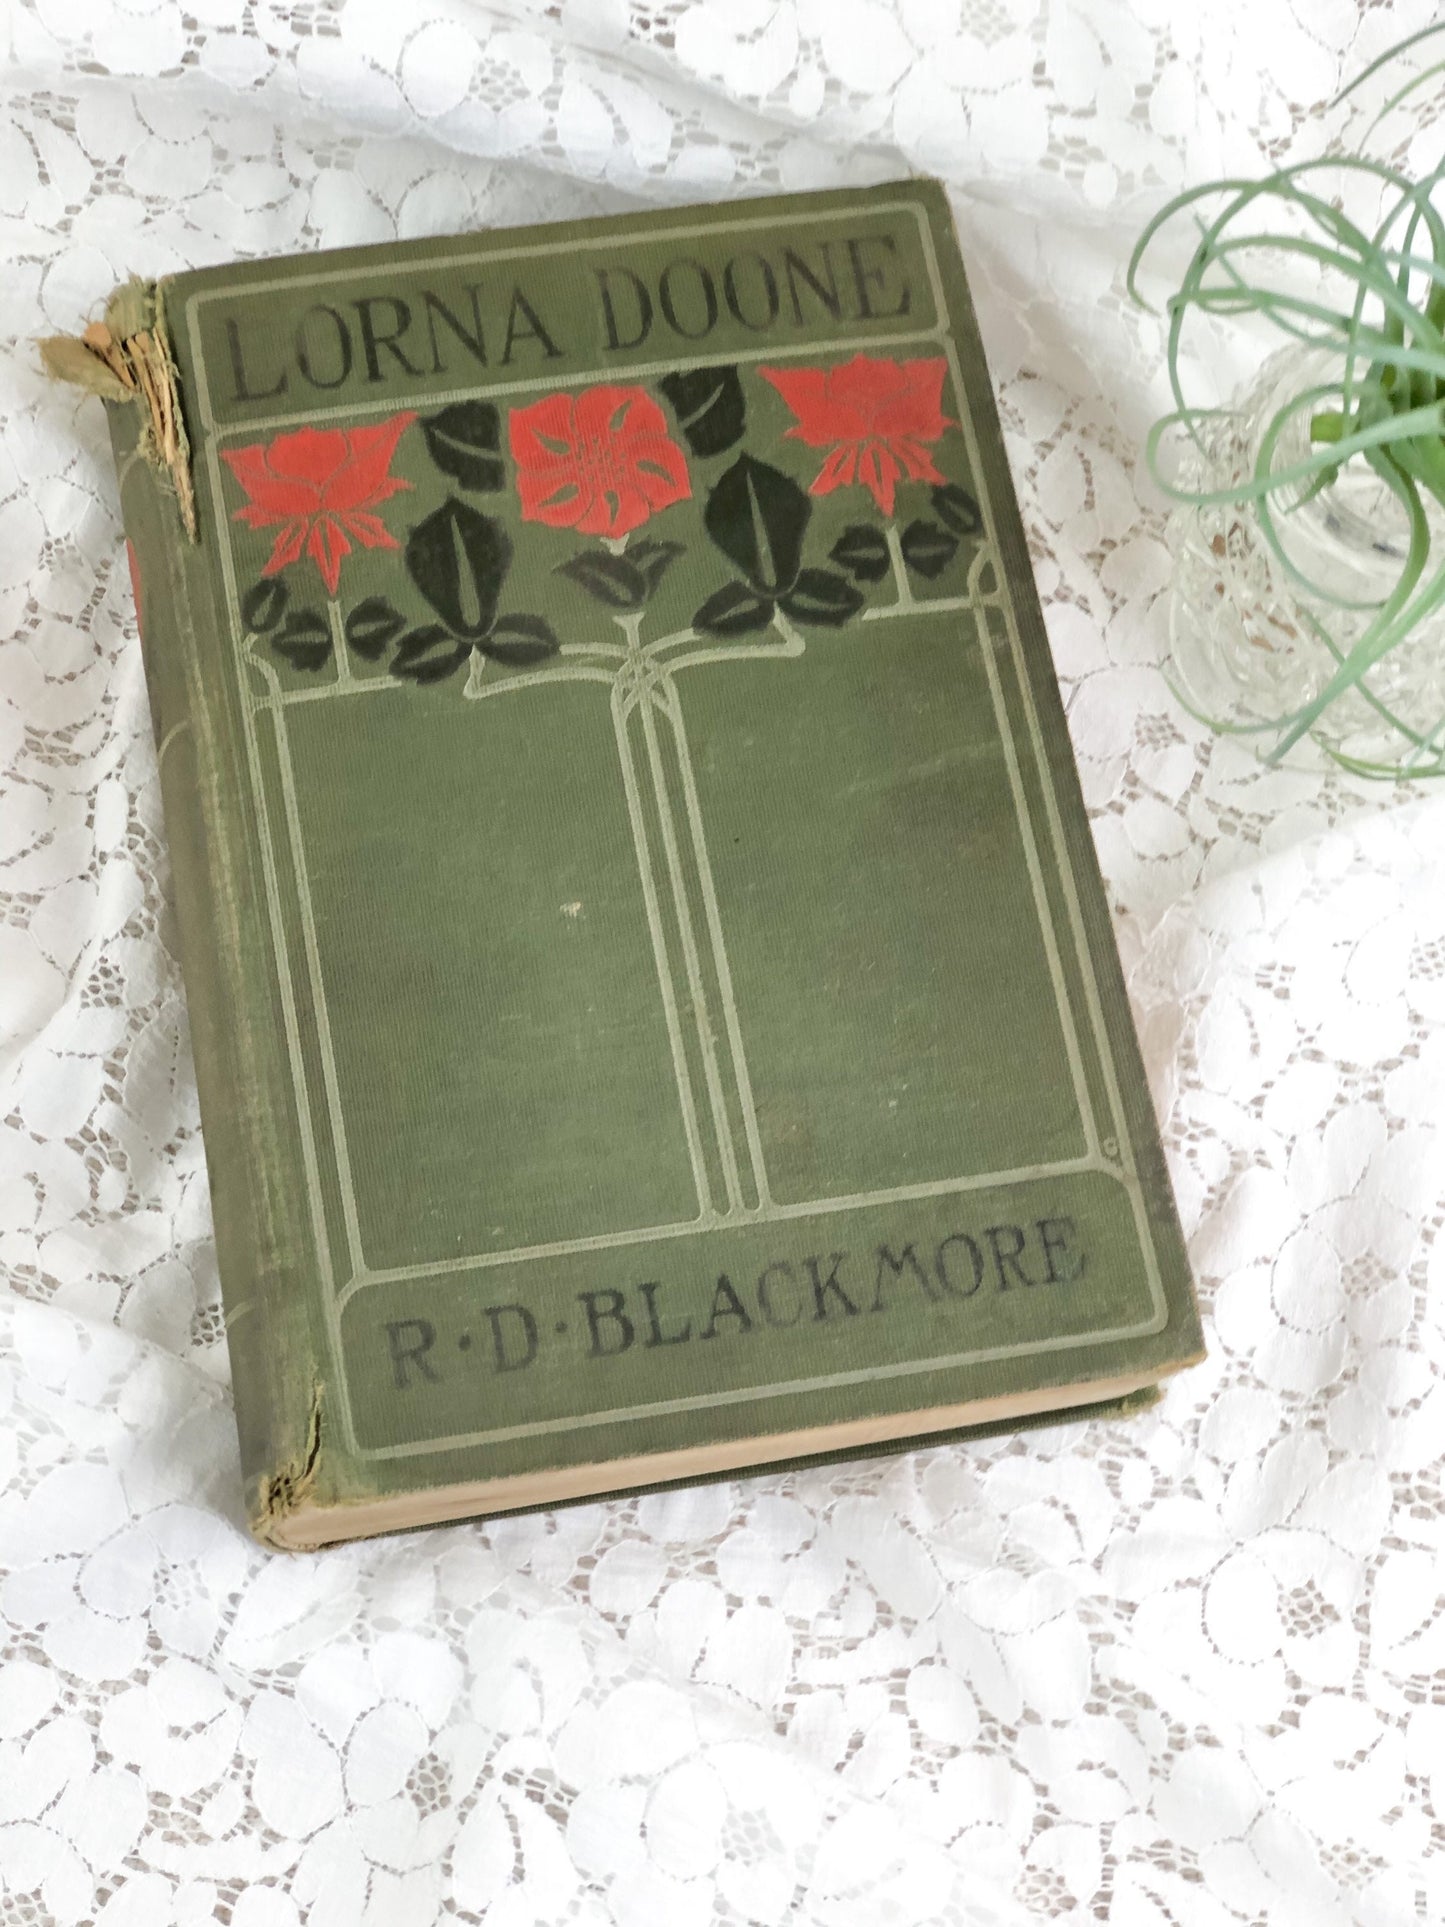 Vintage Lorna Doone by R. D. Blackmore Book